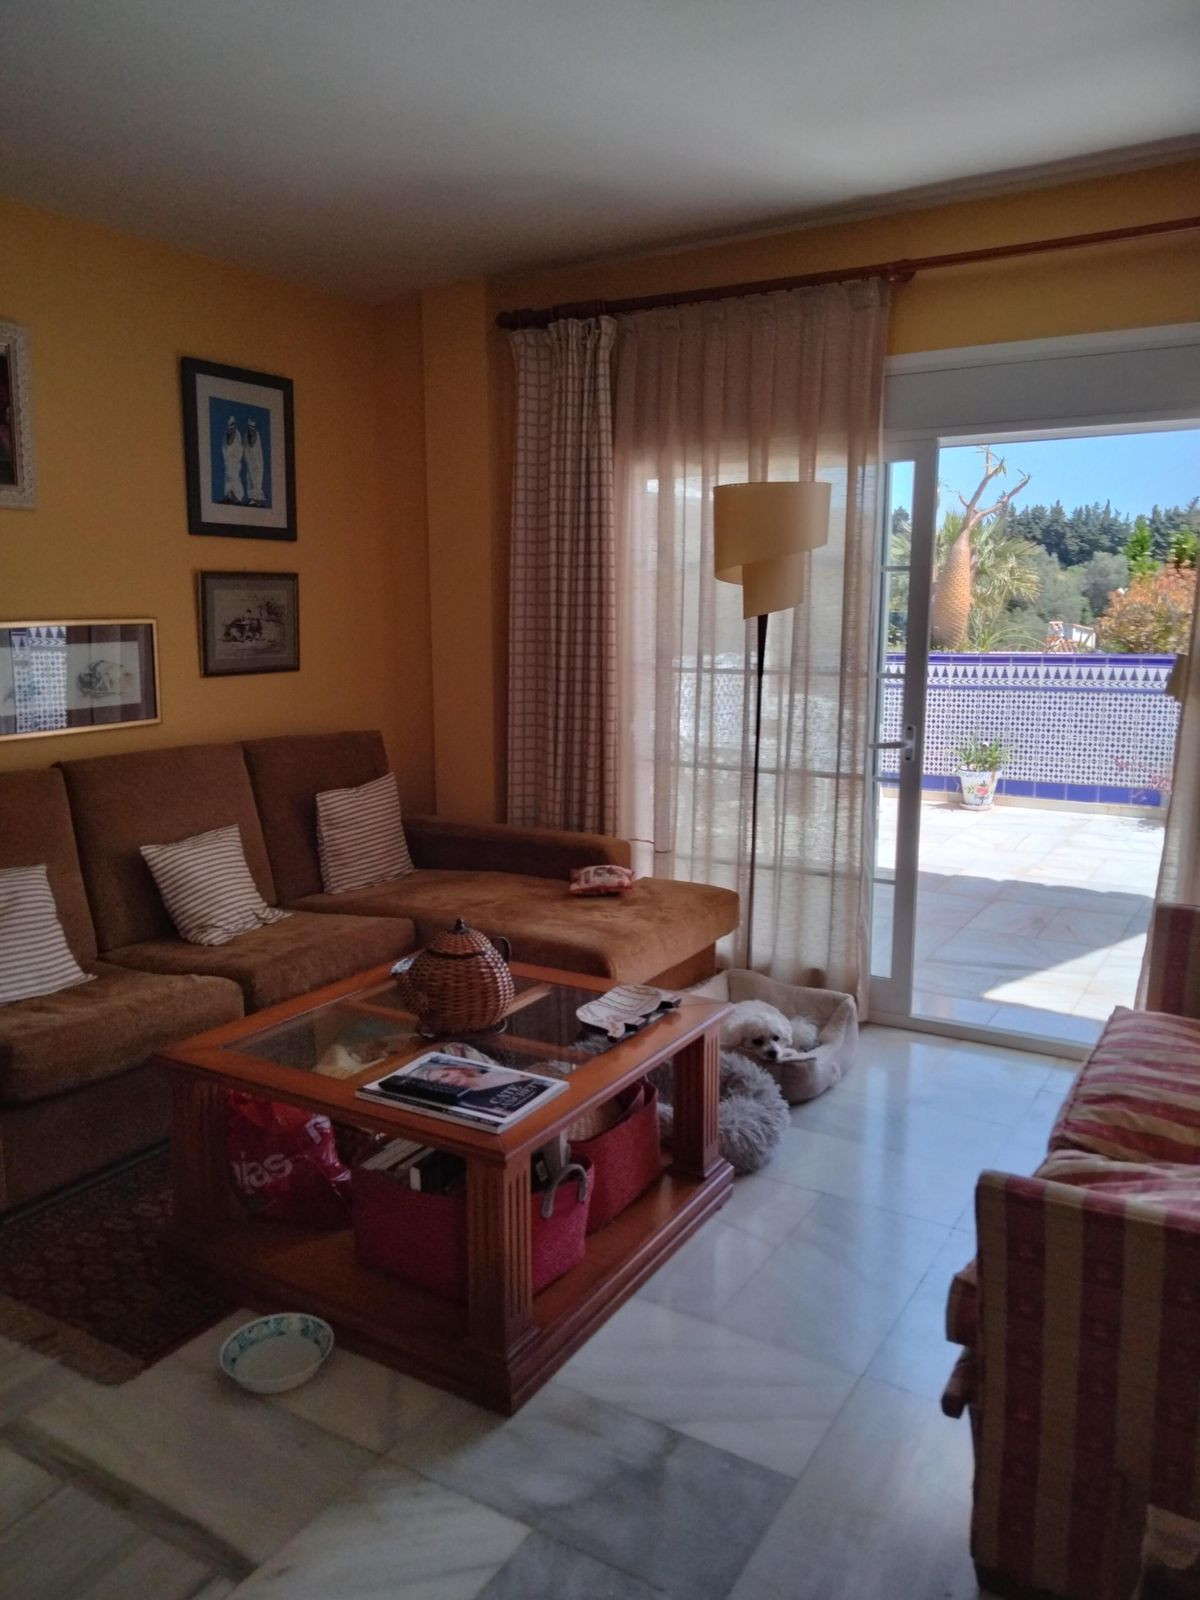 						Apartment  Duplex
													for sale 
																			 in Nueva Andalucía
					